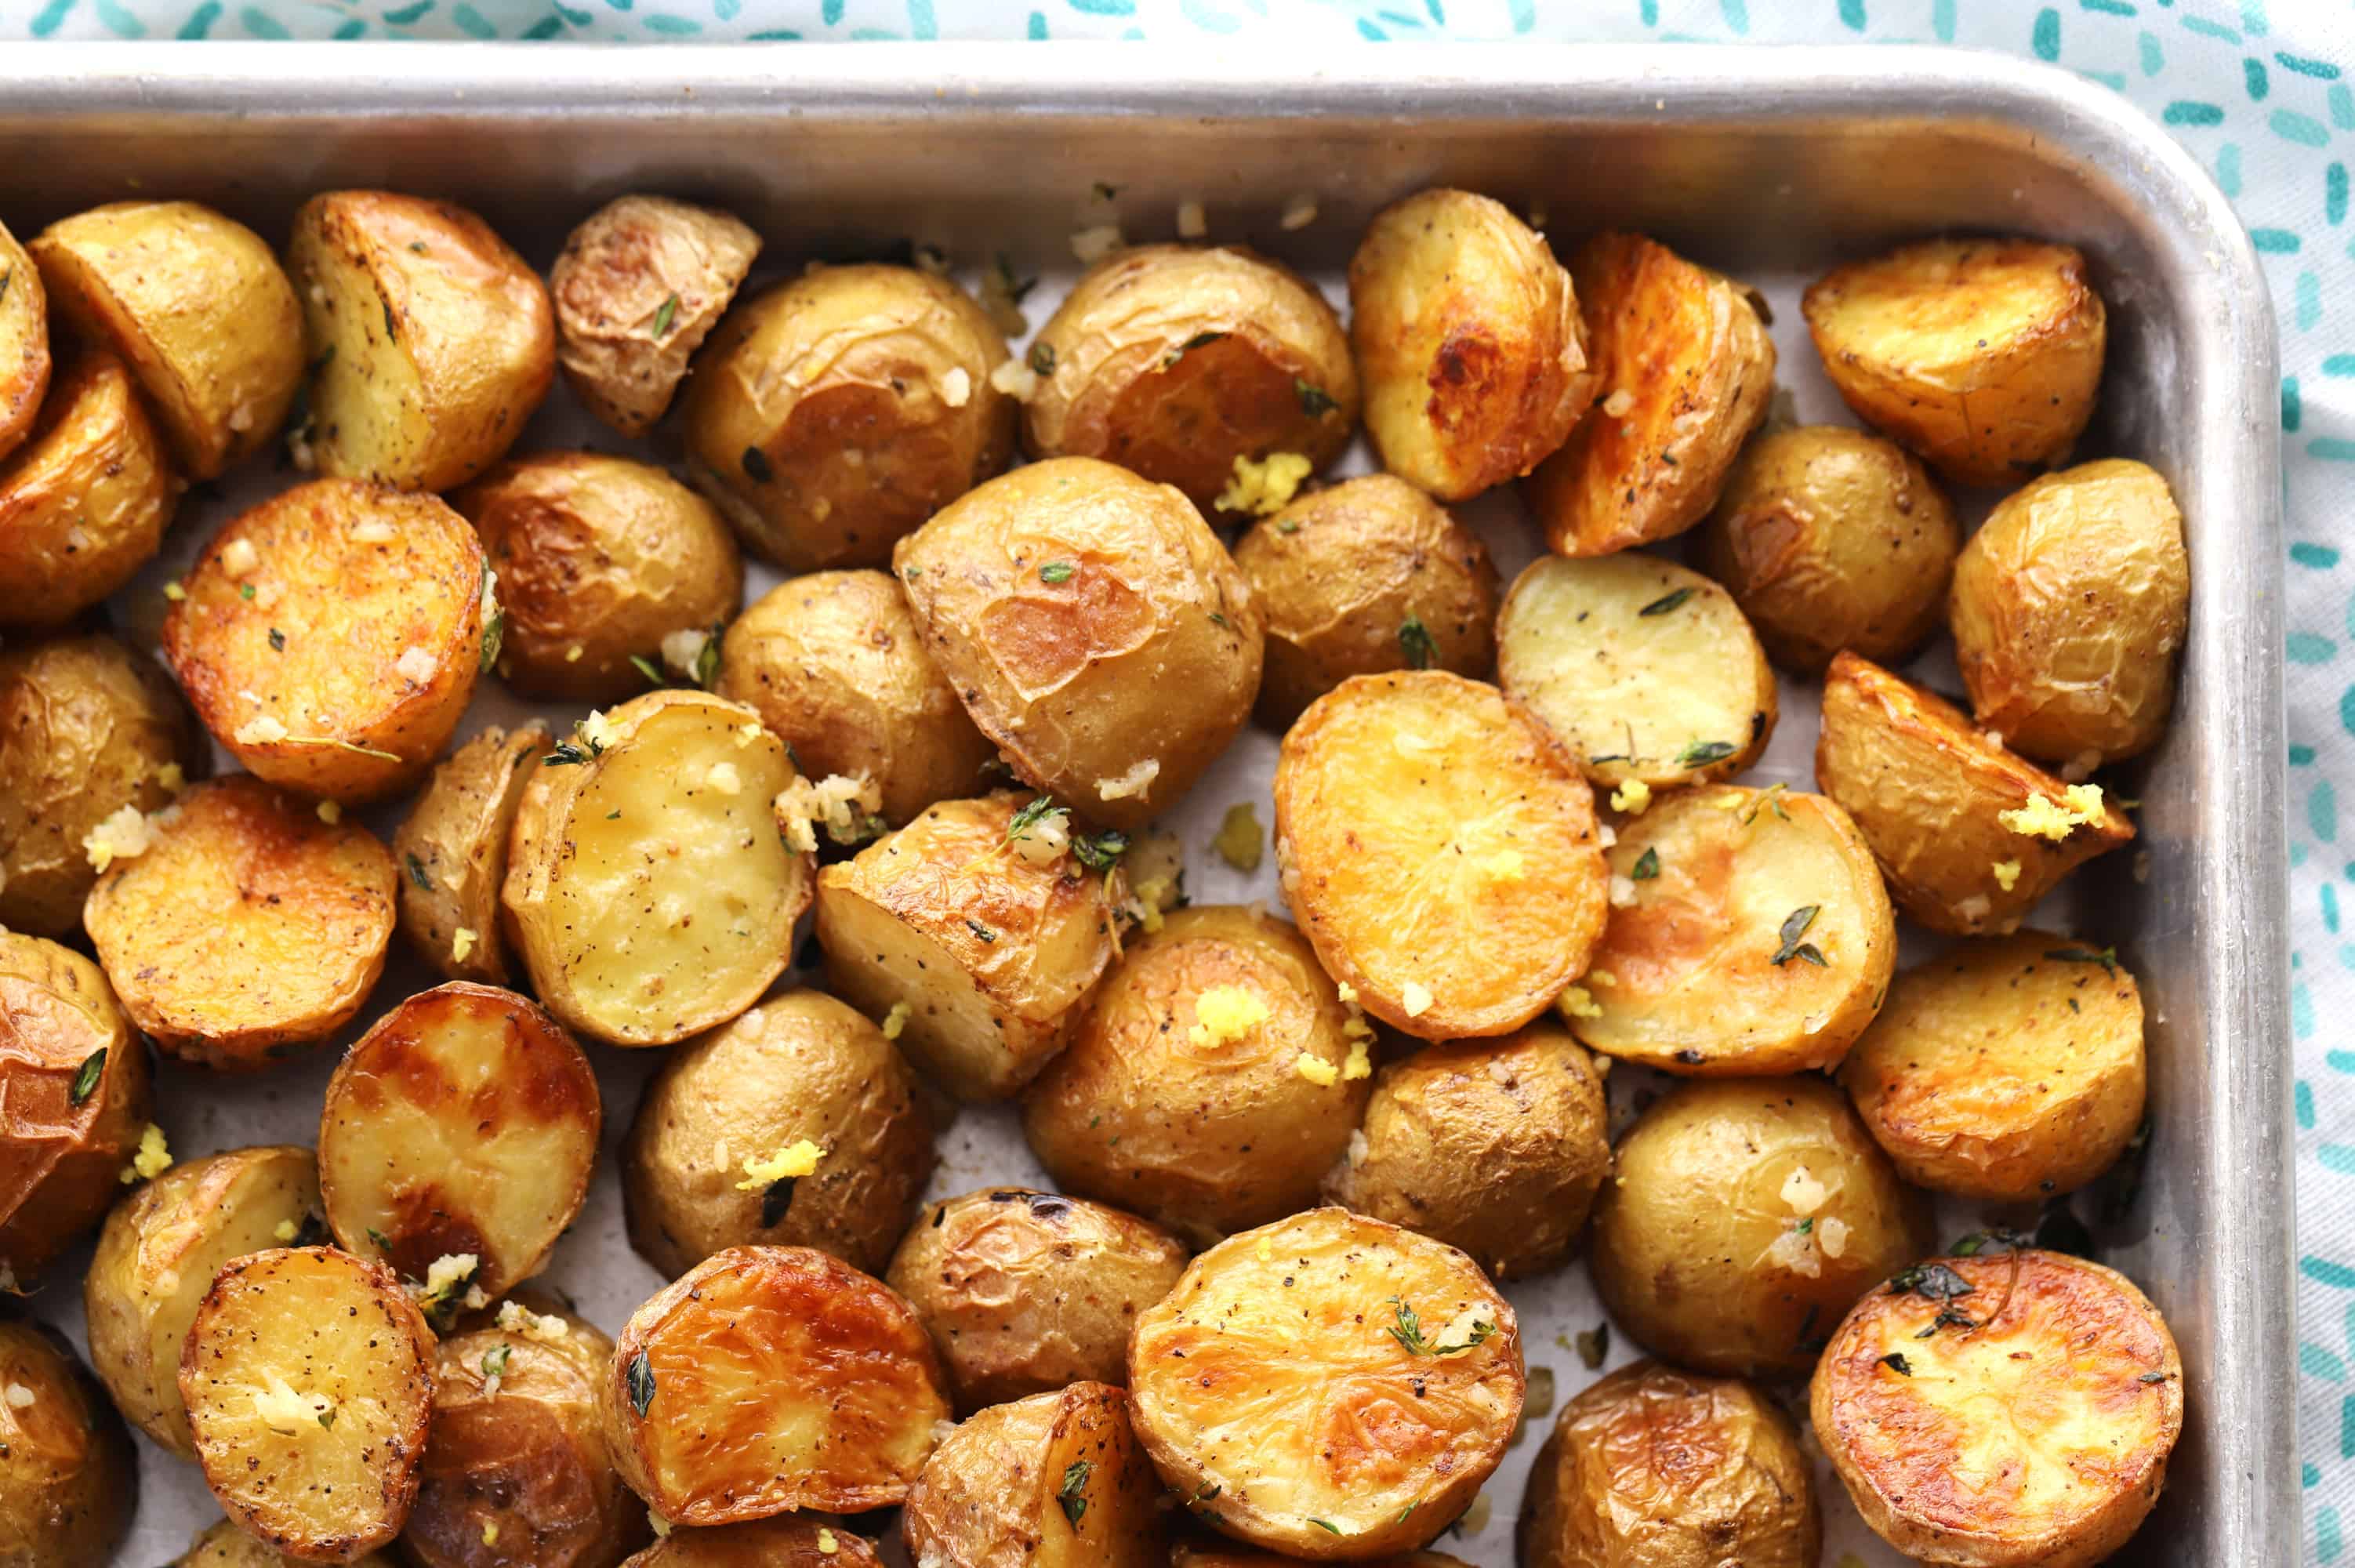 Oven Roasted Potatoes on a baking sheet.